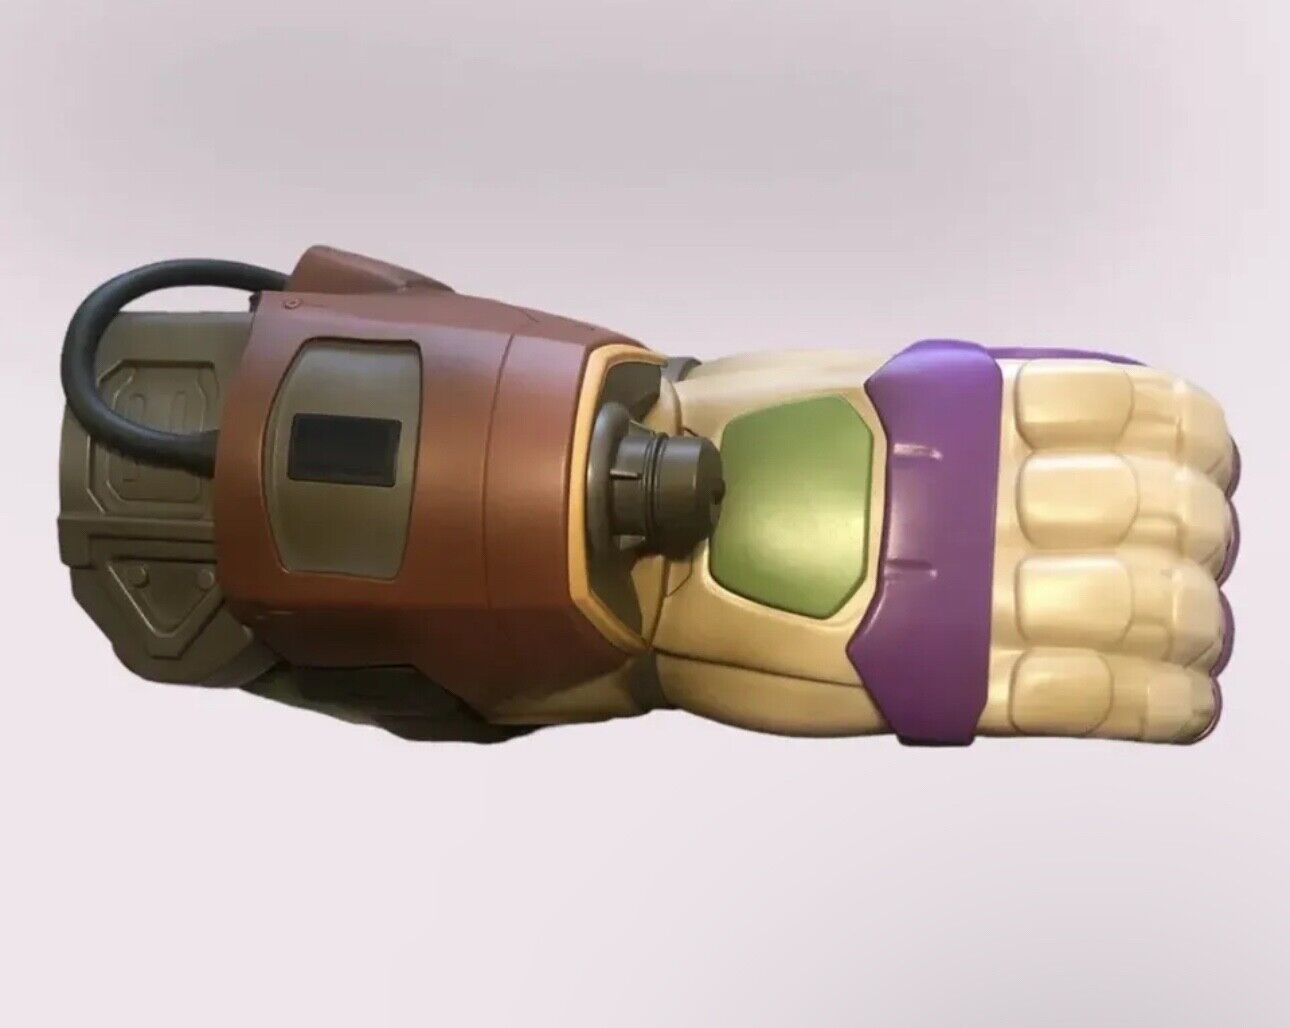 Disney Parks Buzz Lightyear Arm Gauntlet Light Up Cup Drink Holder